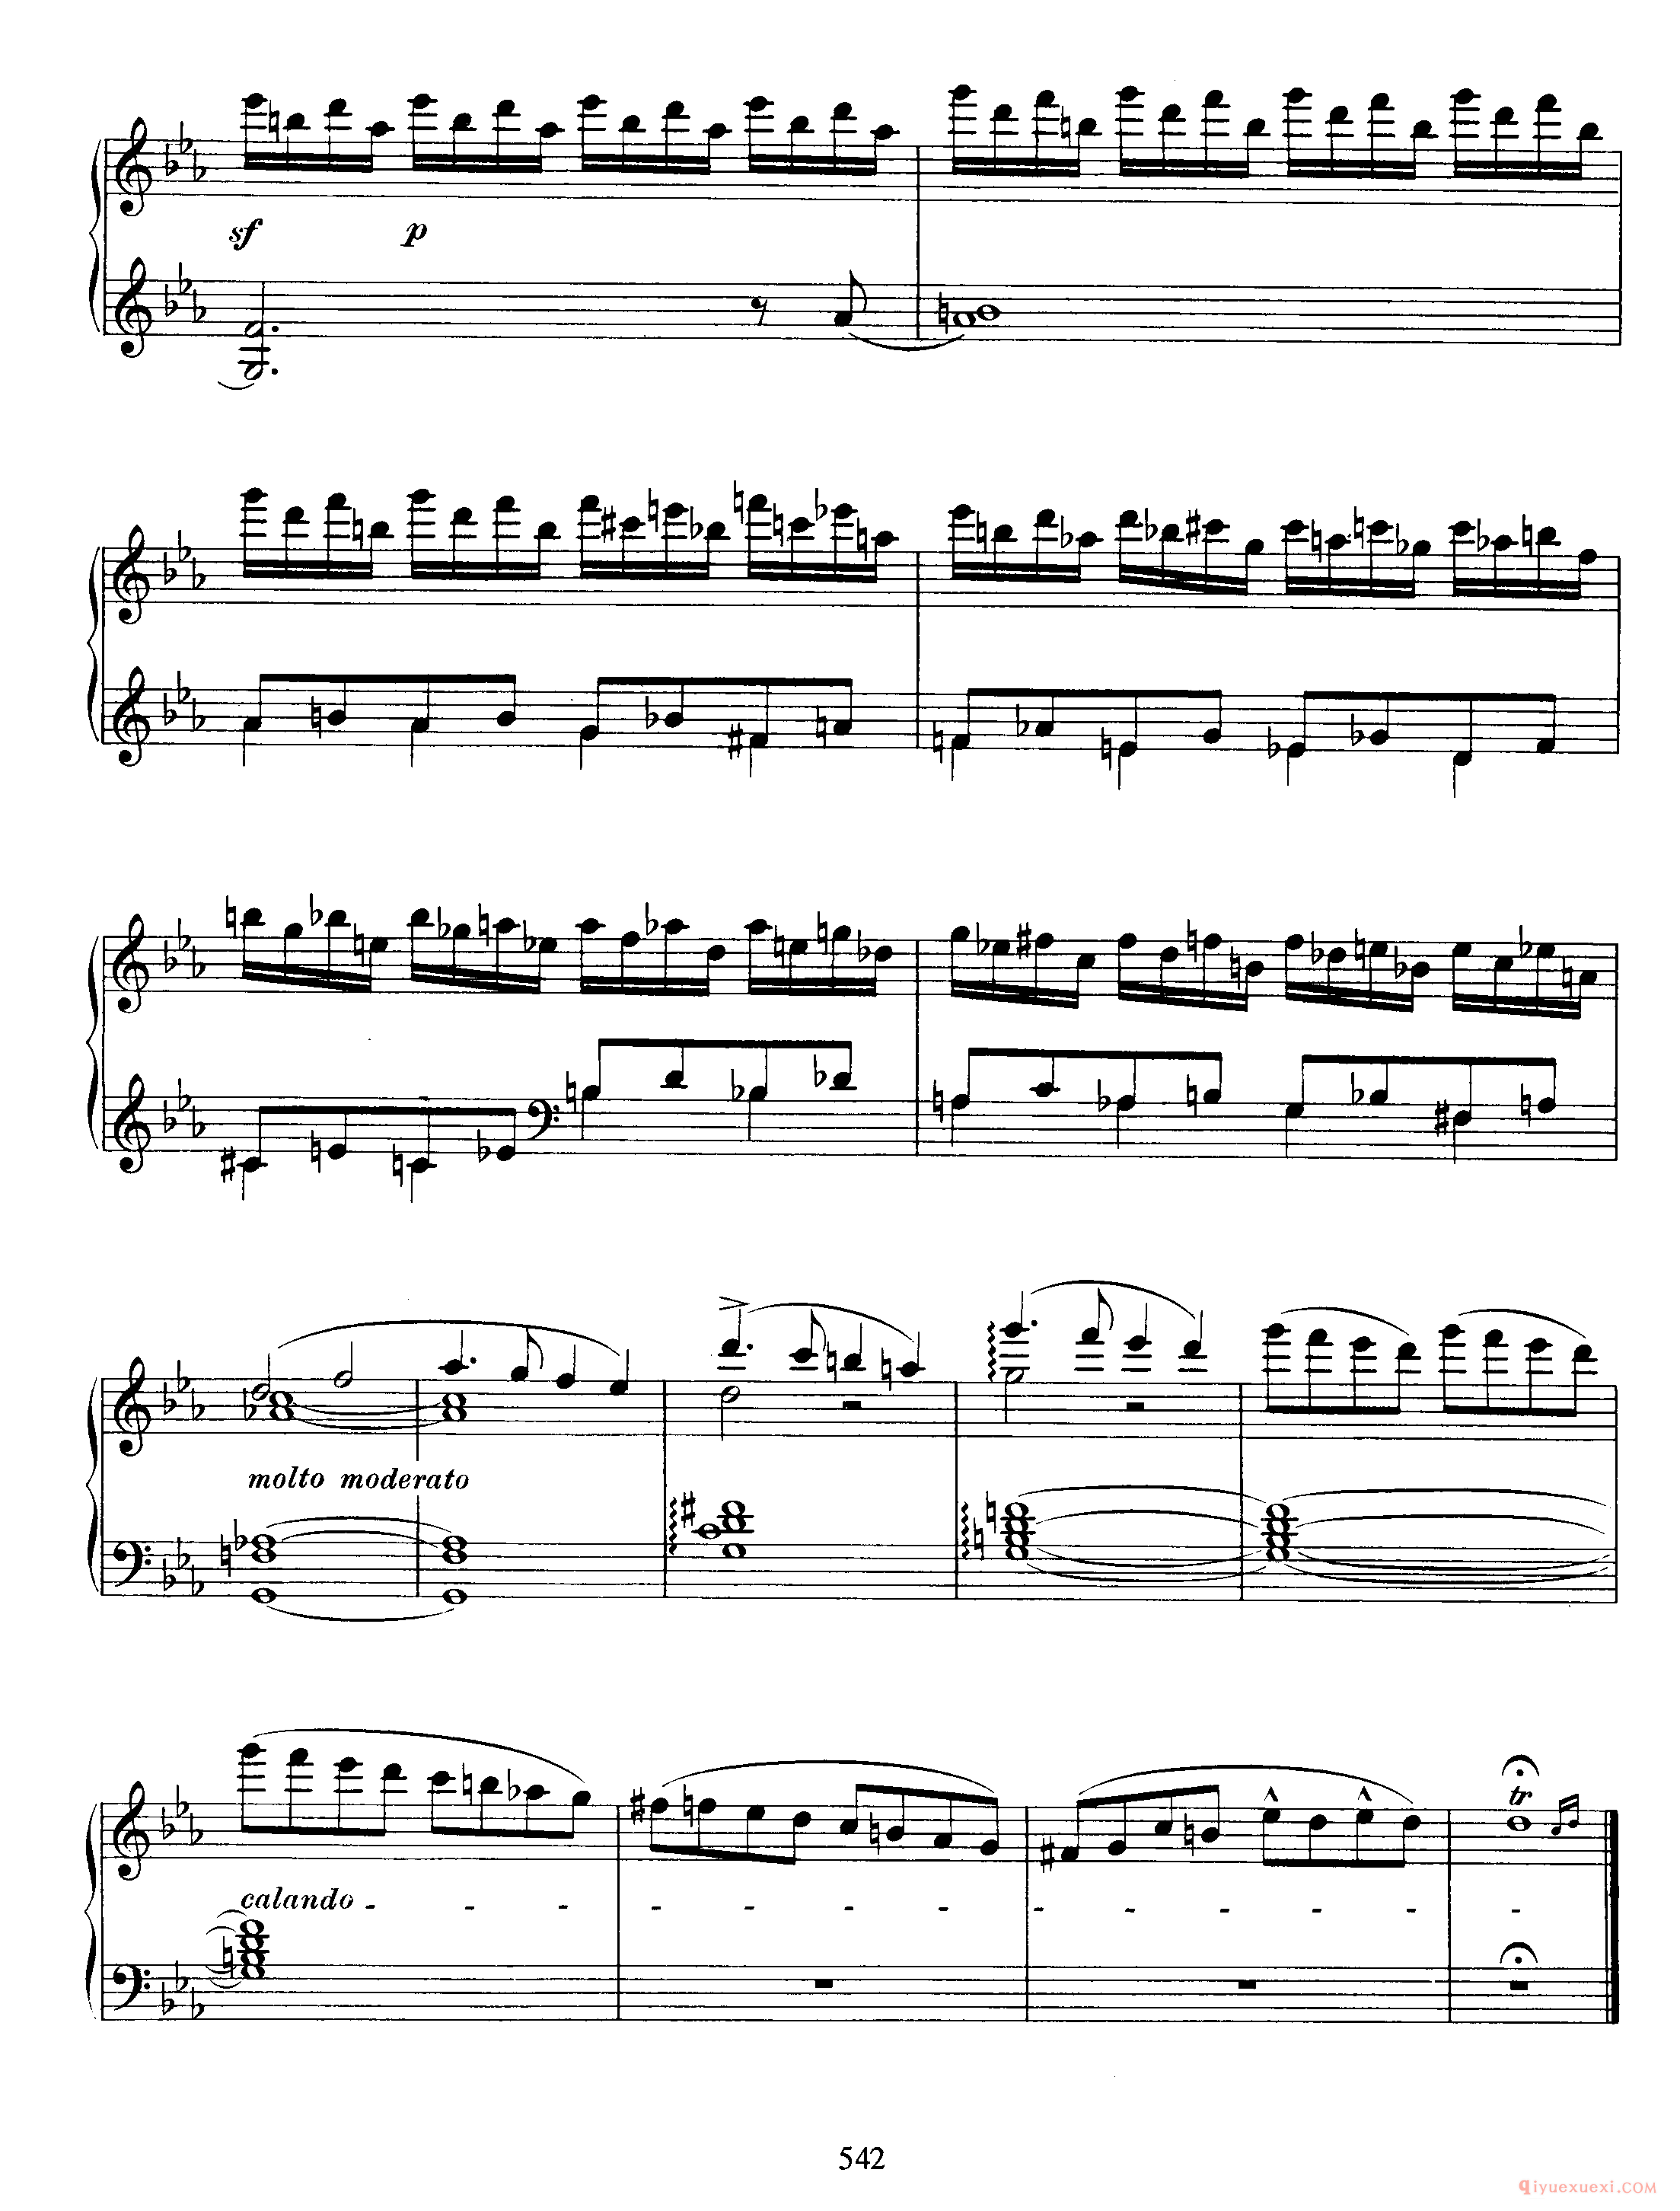 Cadenzafor Beethoven's Piano Concerto in C Minor, Op.37_勃拉姆斯协奏曲华彩